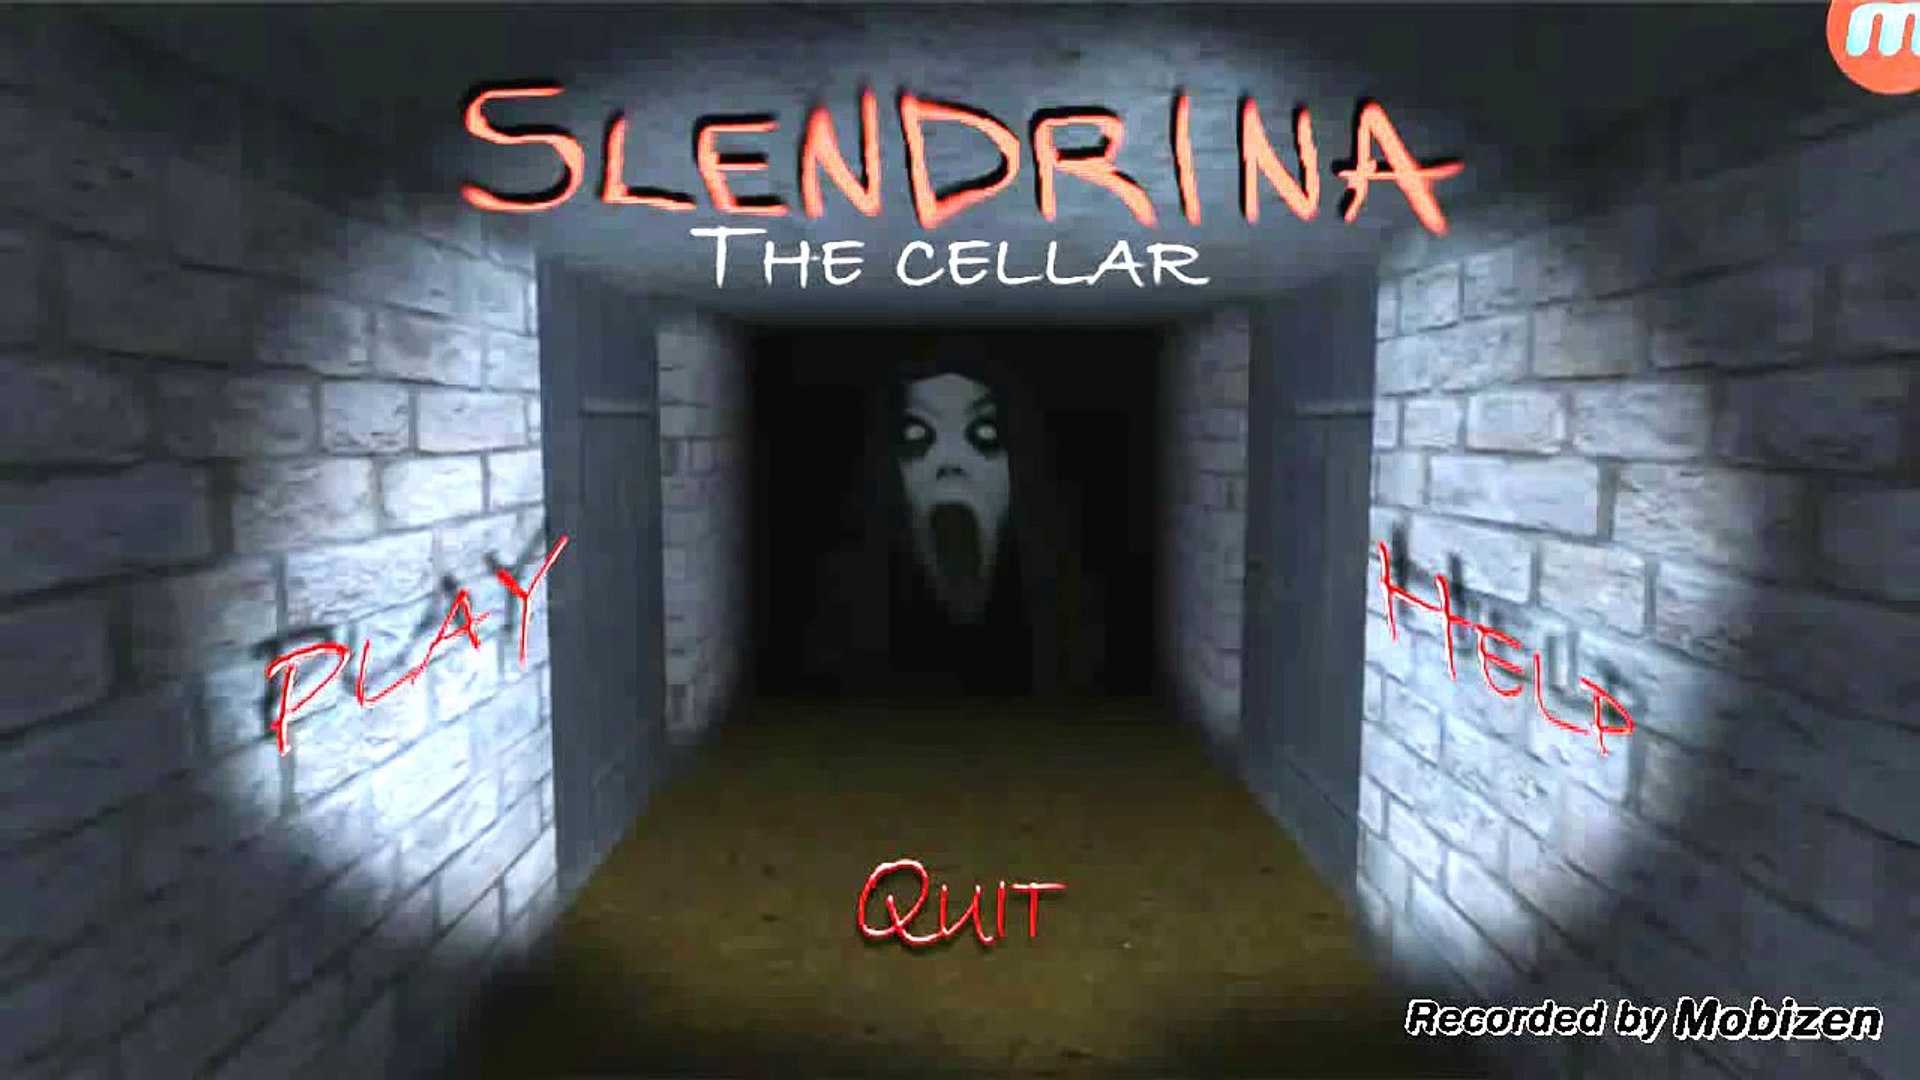 Slendrina: The Cellar 2